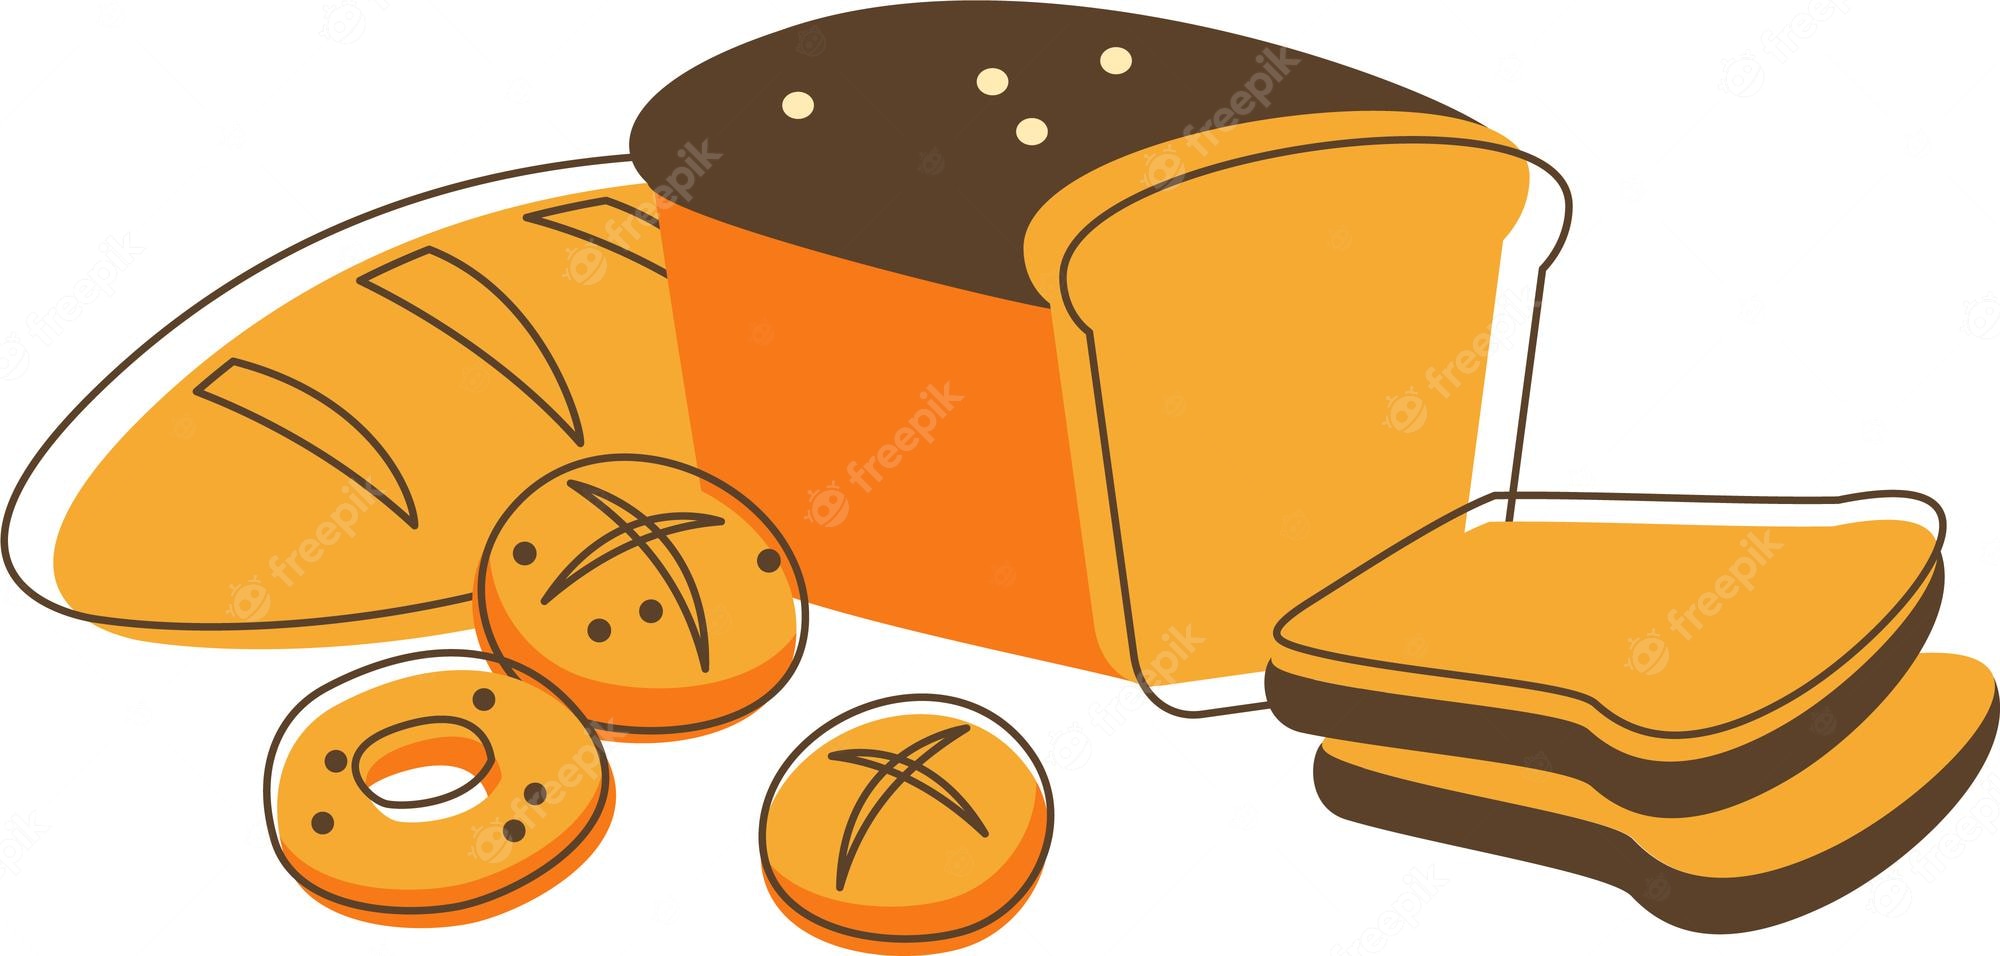 Cinnamon Roll Hot Cross Bun Hamburger Clip Art - Yellow Bread - Clip ...